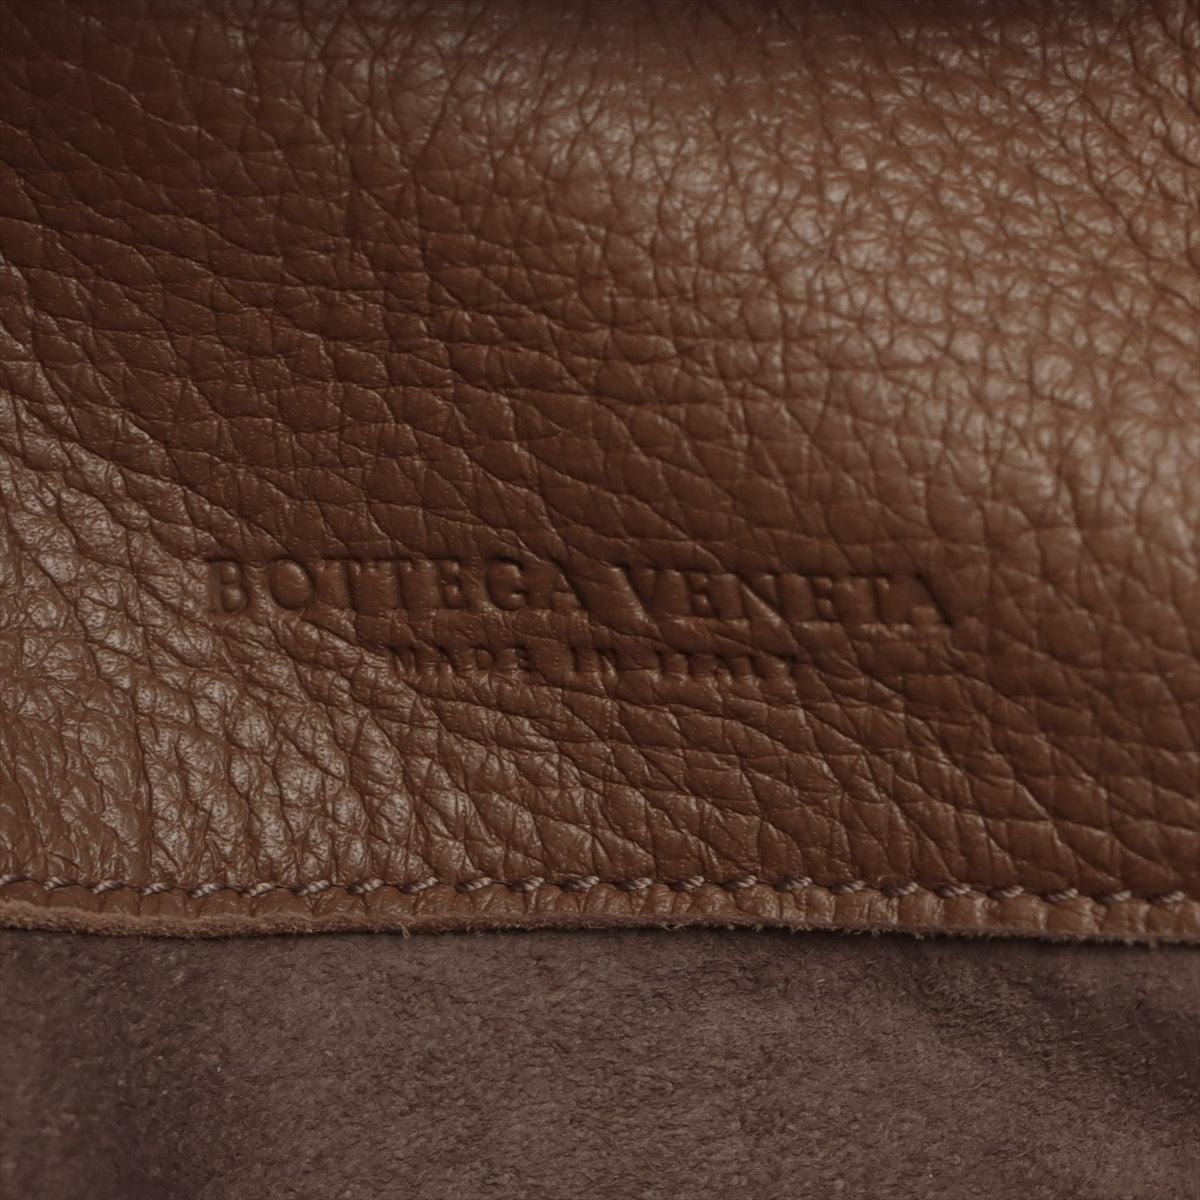 Bottega Veneta Intercourse 皮革馬桶包 棕色